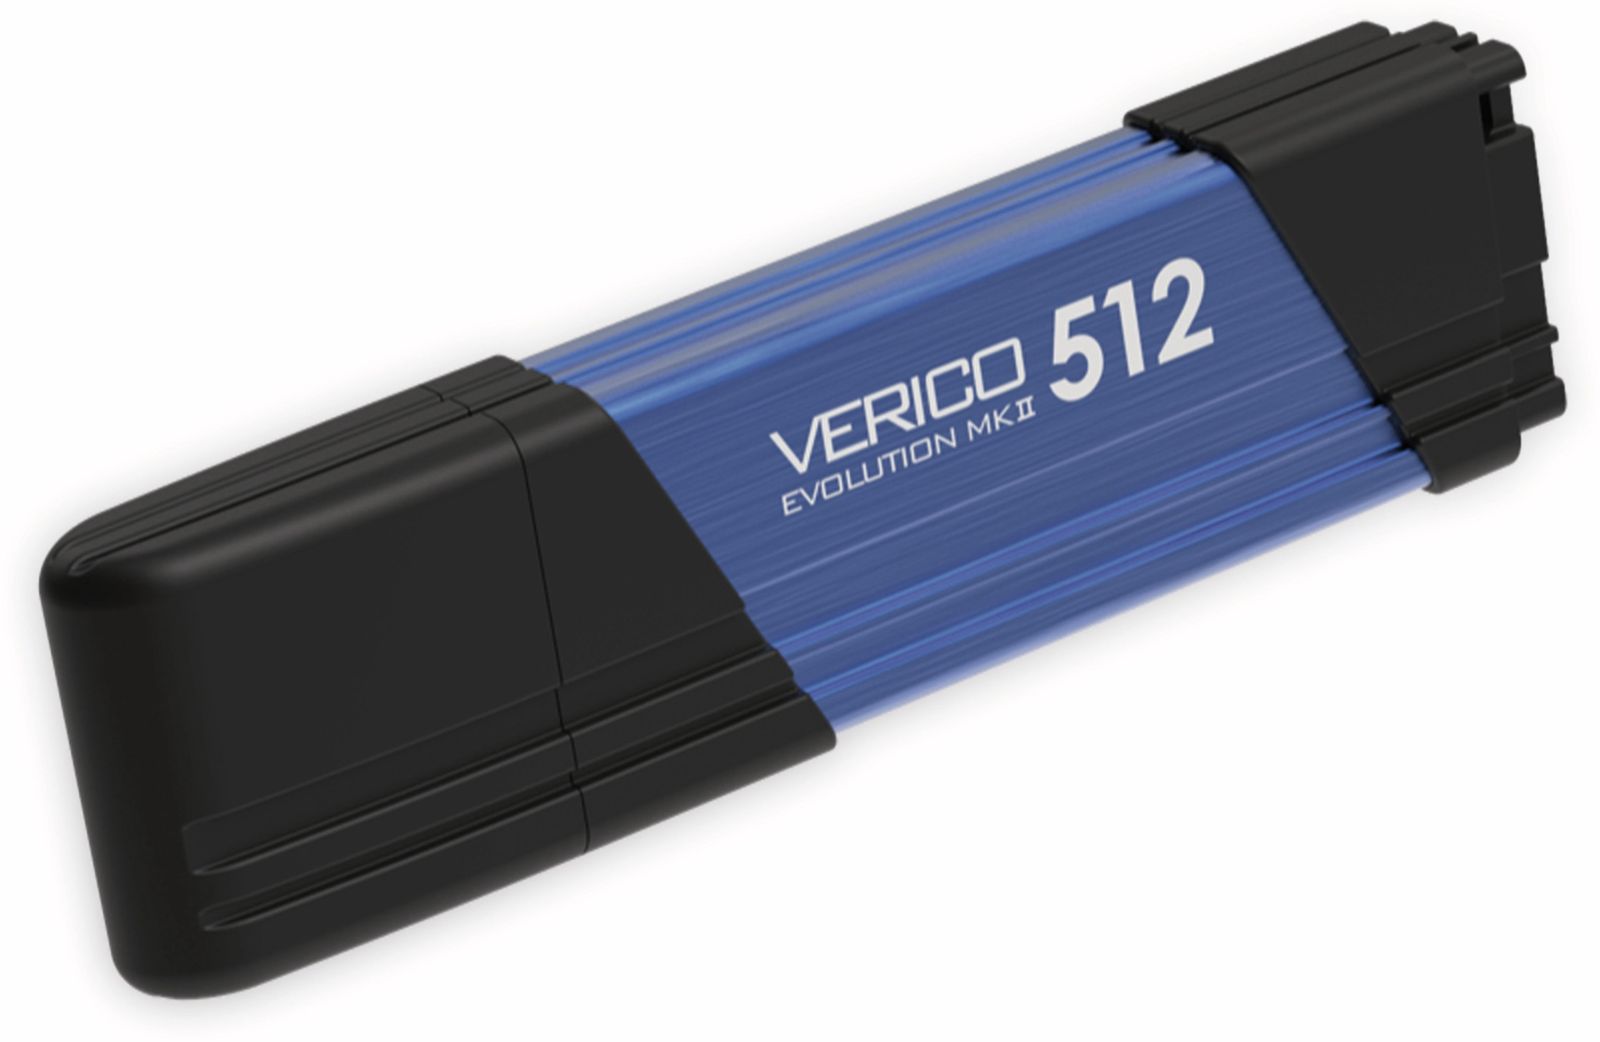 VERICO USB3.1 Stick Evolution MK-II, 512 GB, blau von verico